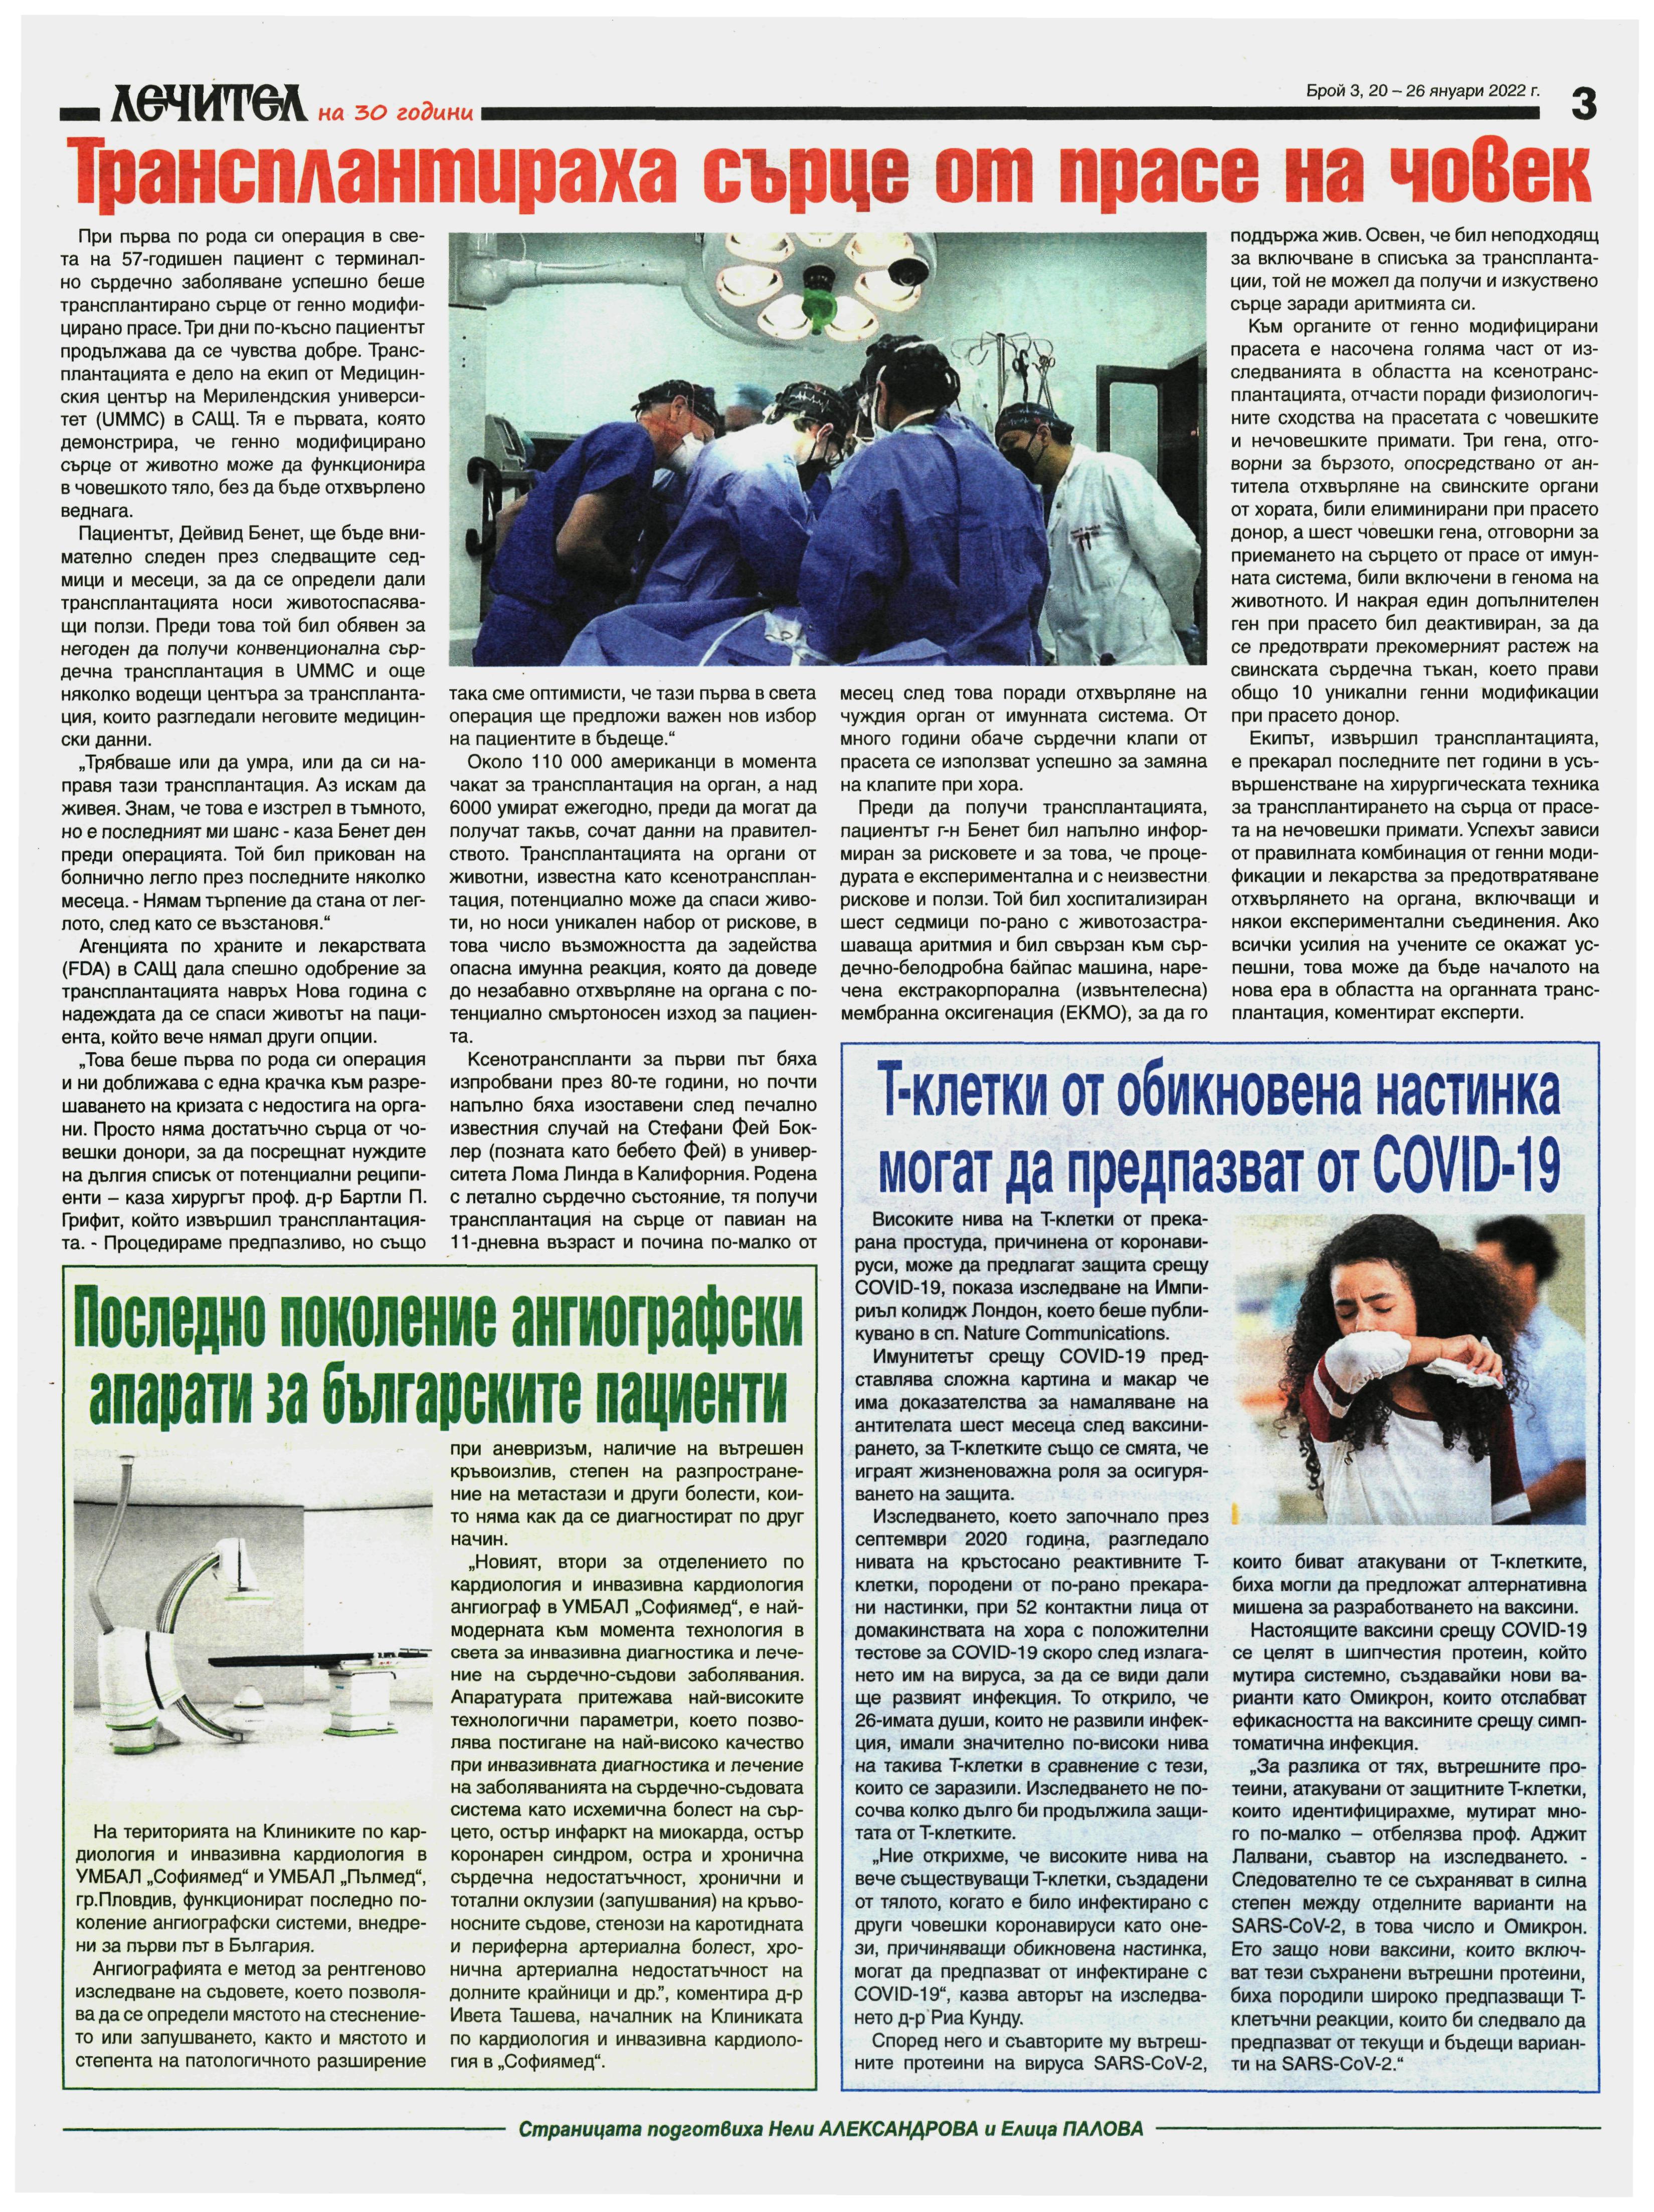 Последно поколение ангиографски апарати за българските пациенти